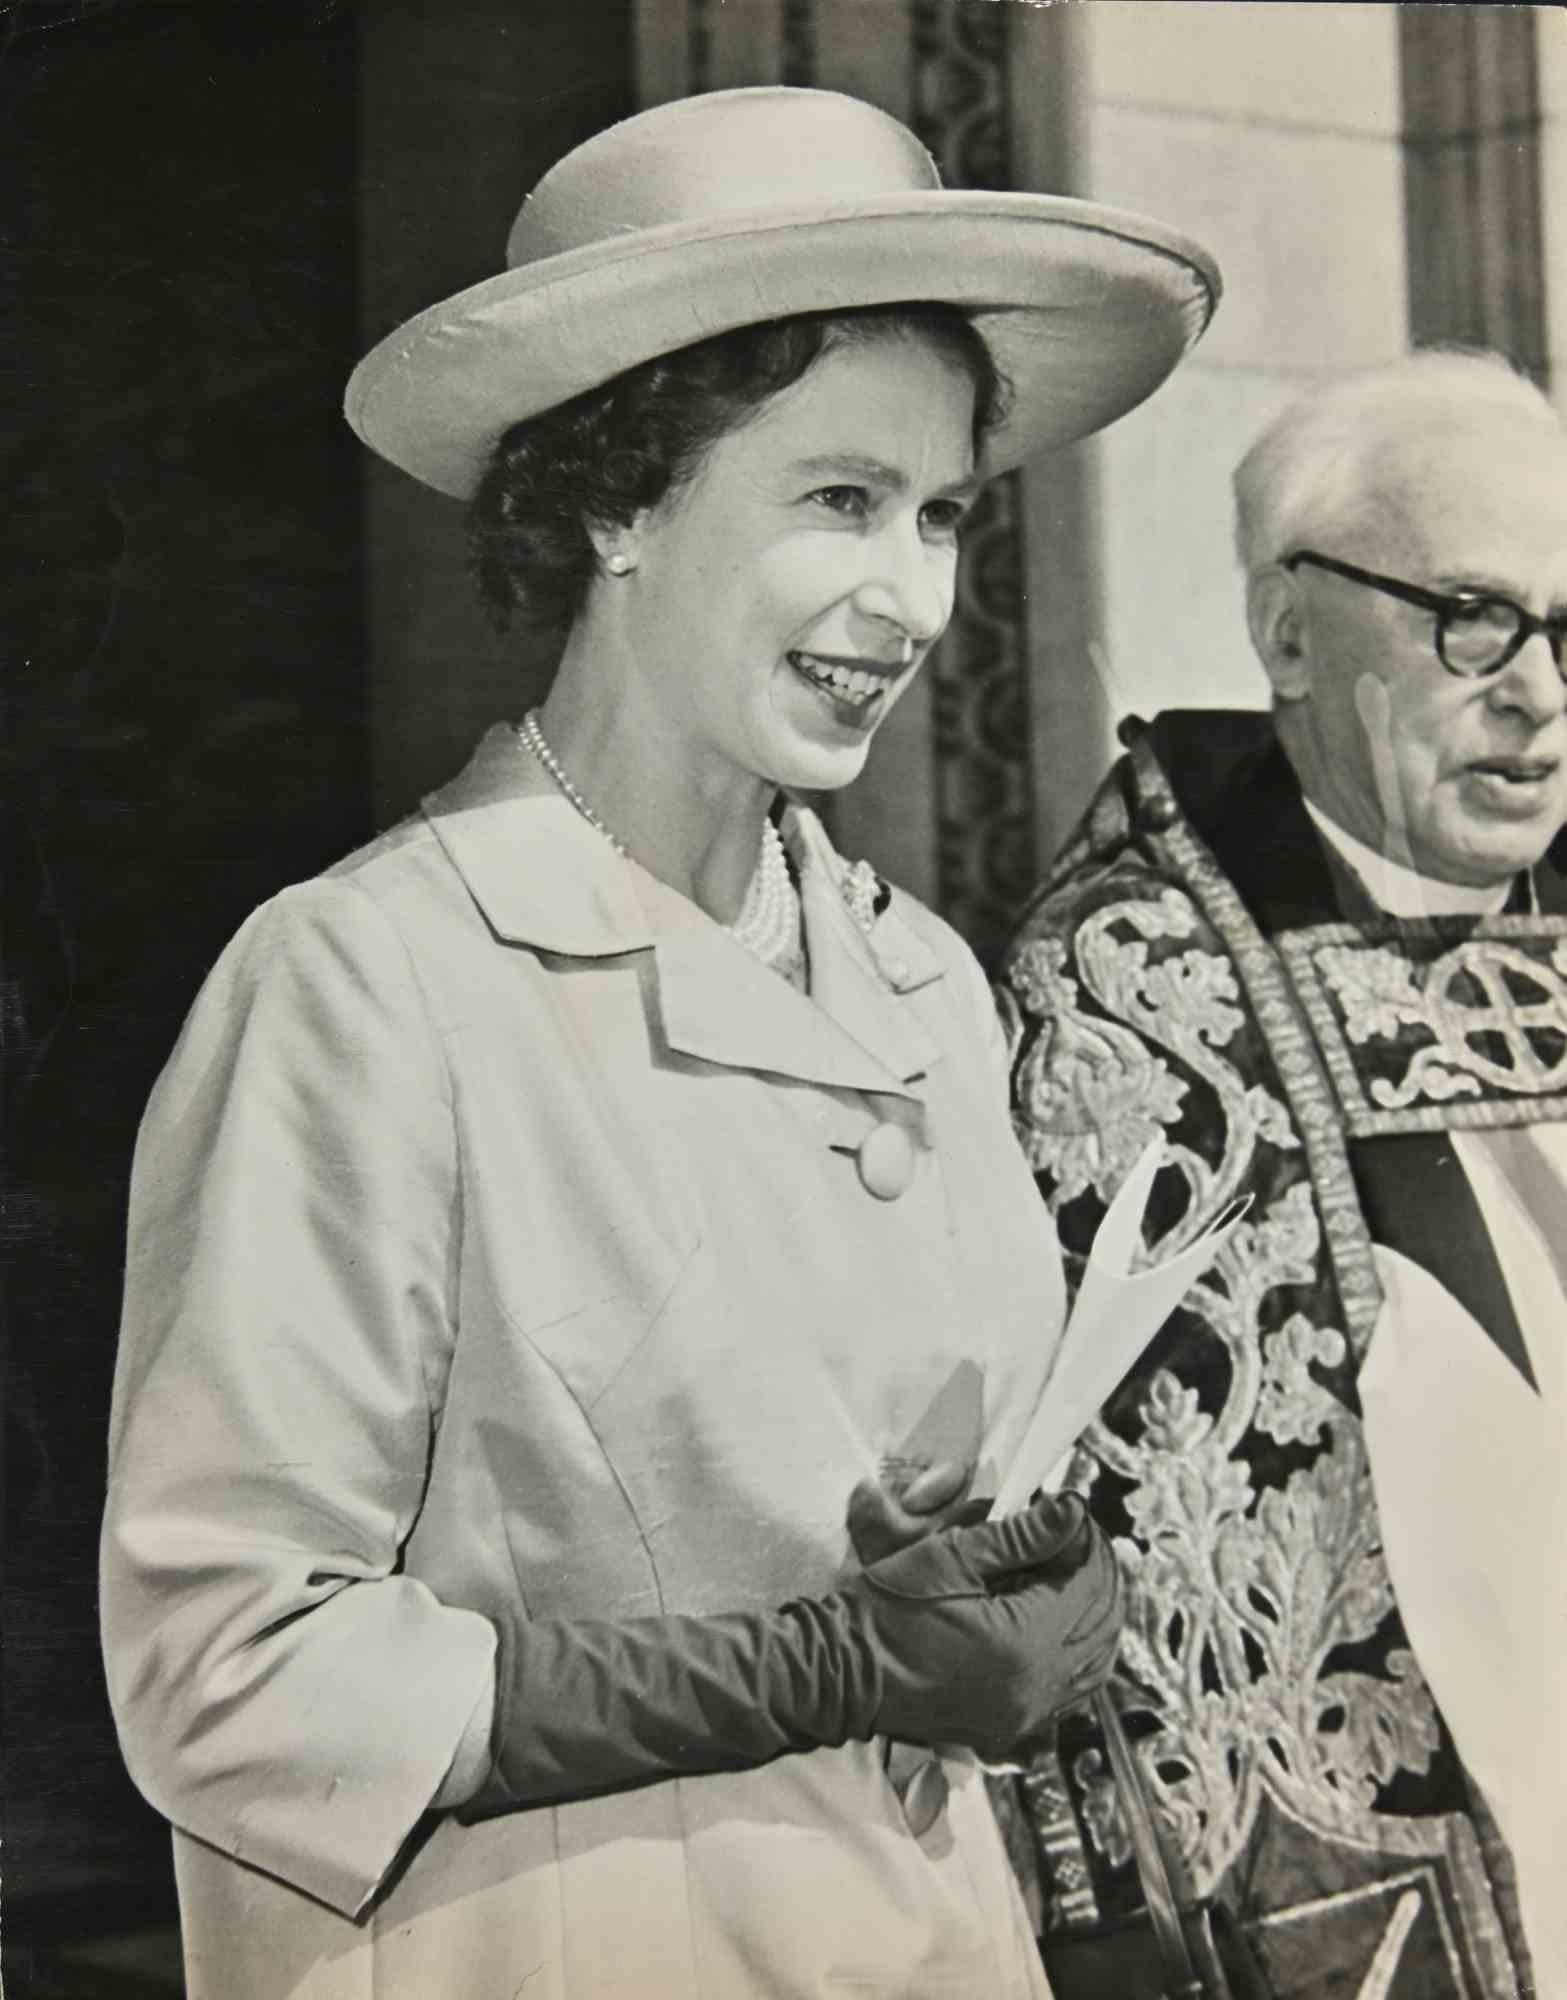 Unknown Portrait Photograph - Queen Elizabeth with Priest - Photograph - 1970s